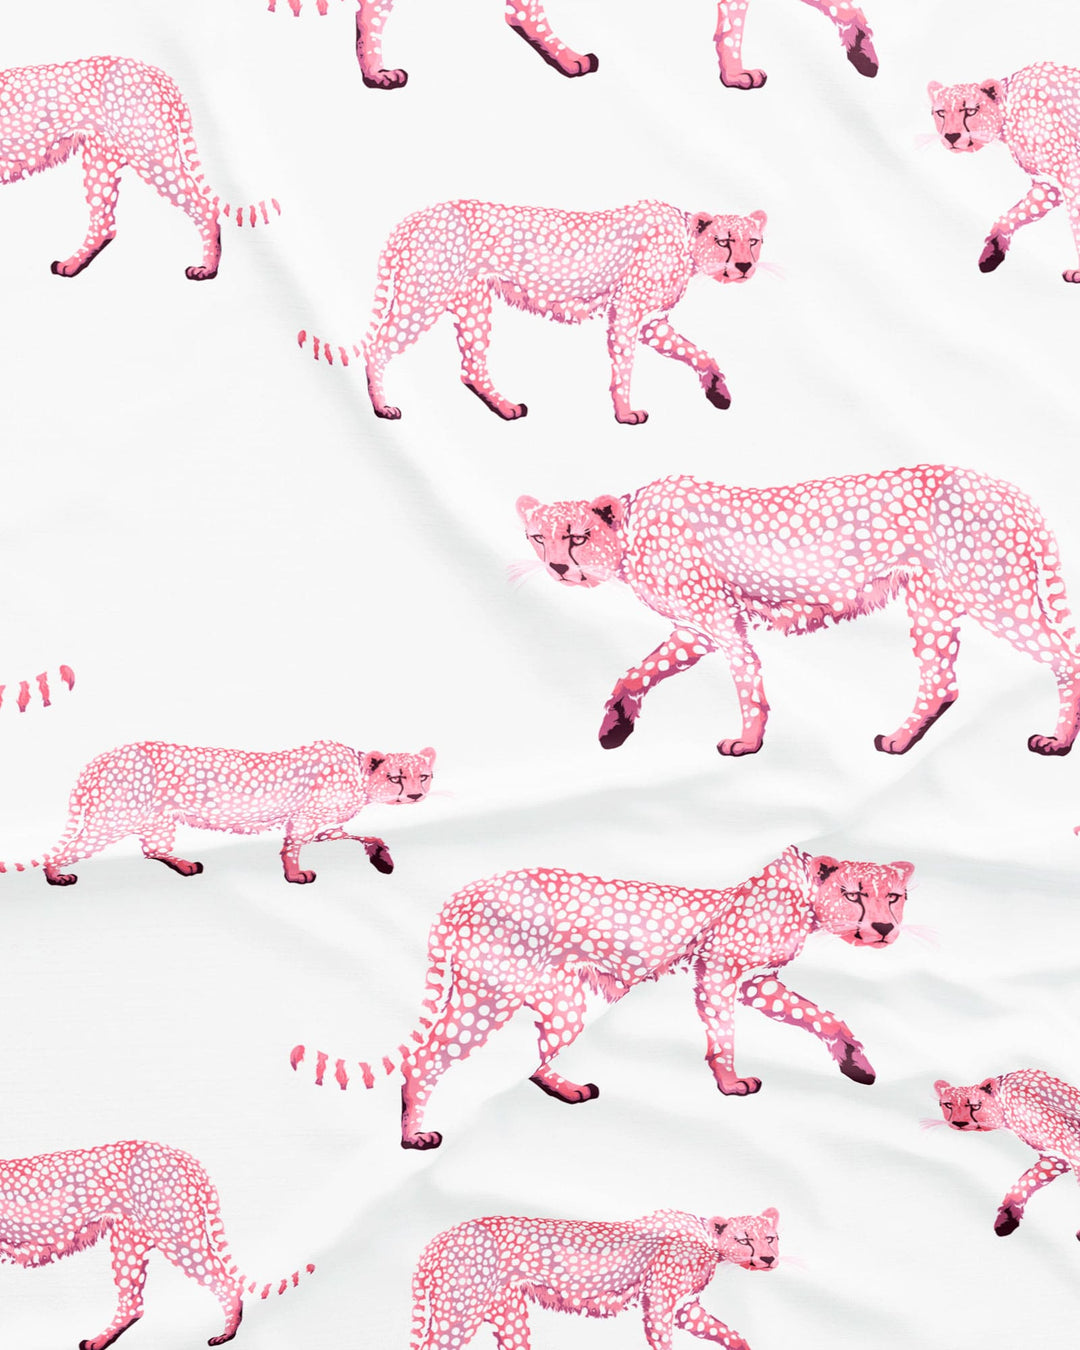 Women's cotton pyjamas set - Pink cheetah on white